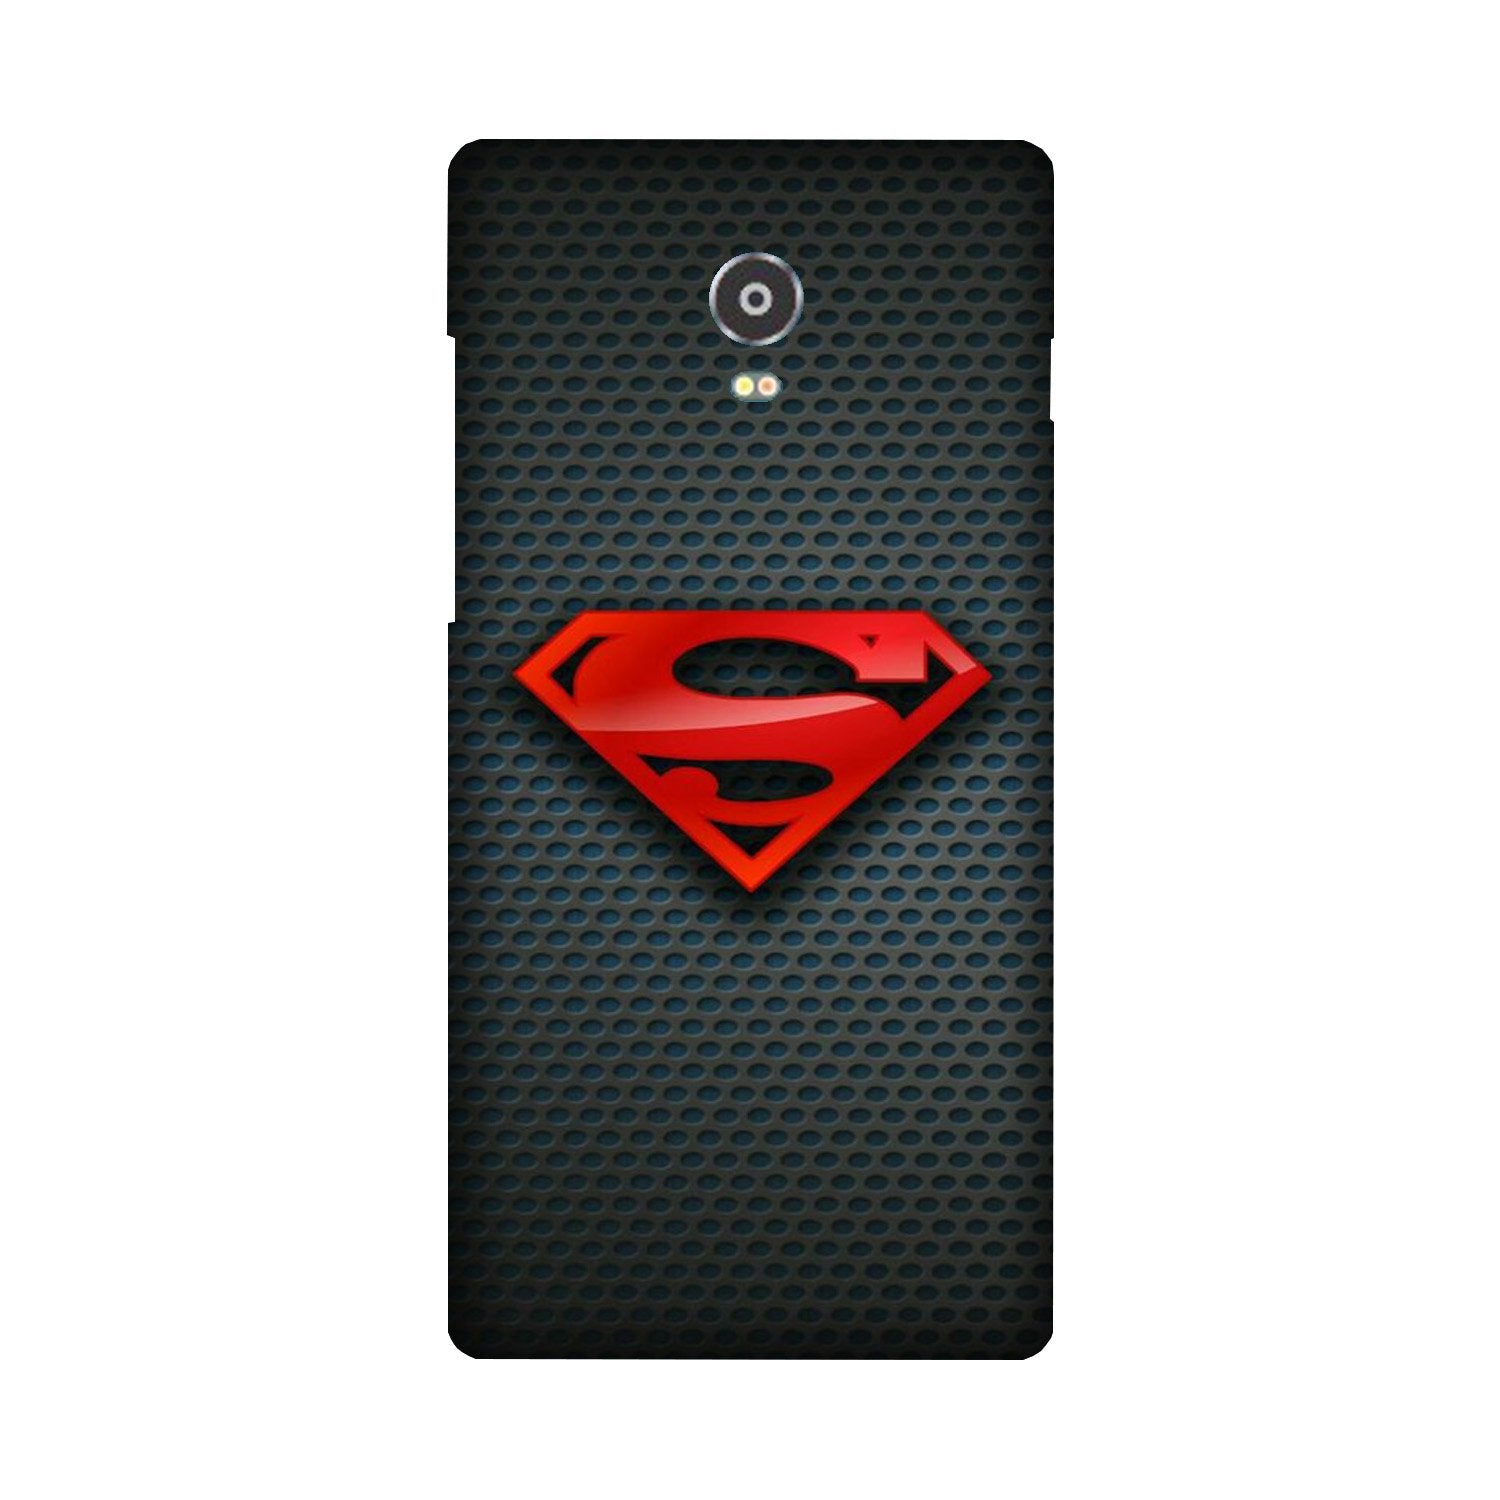 Superman Case for Lenovo Vibe P1 (Design No. 247)